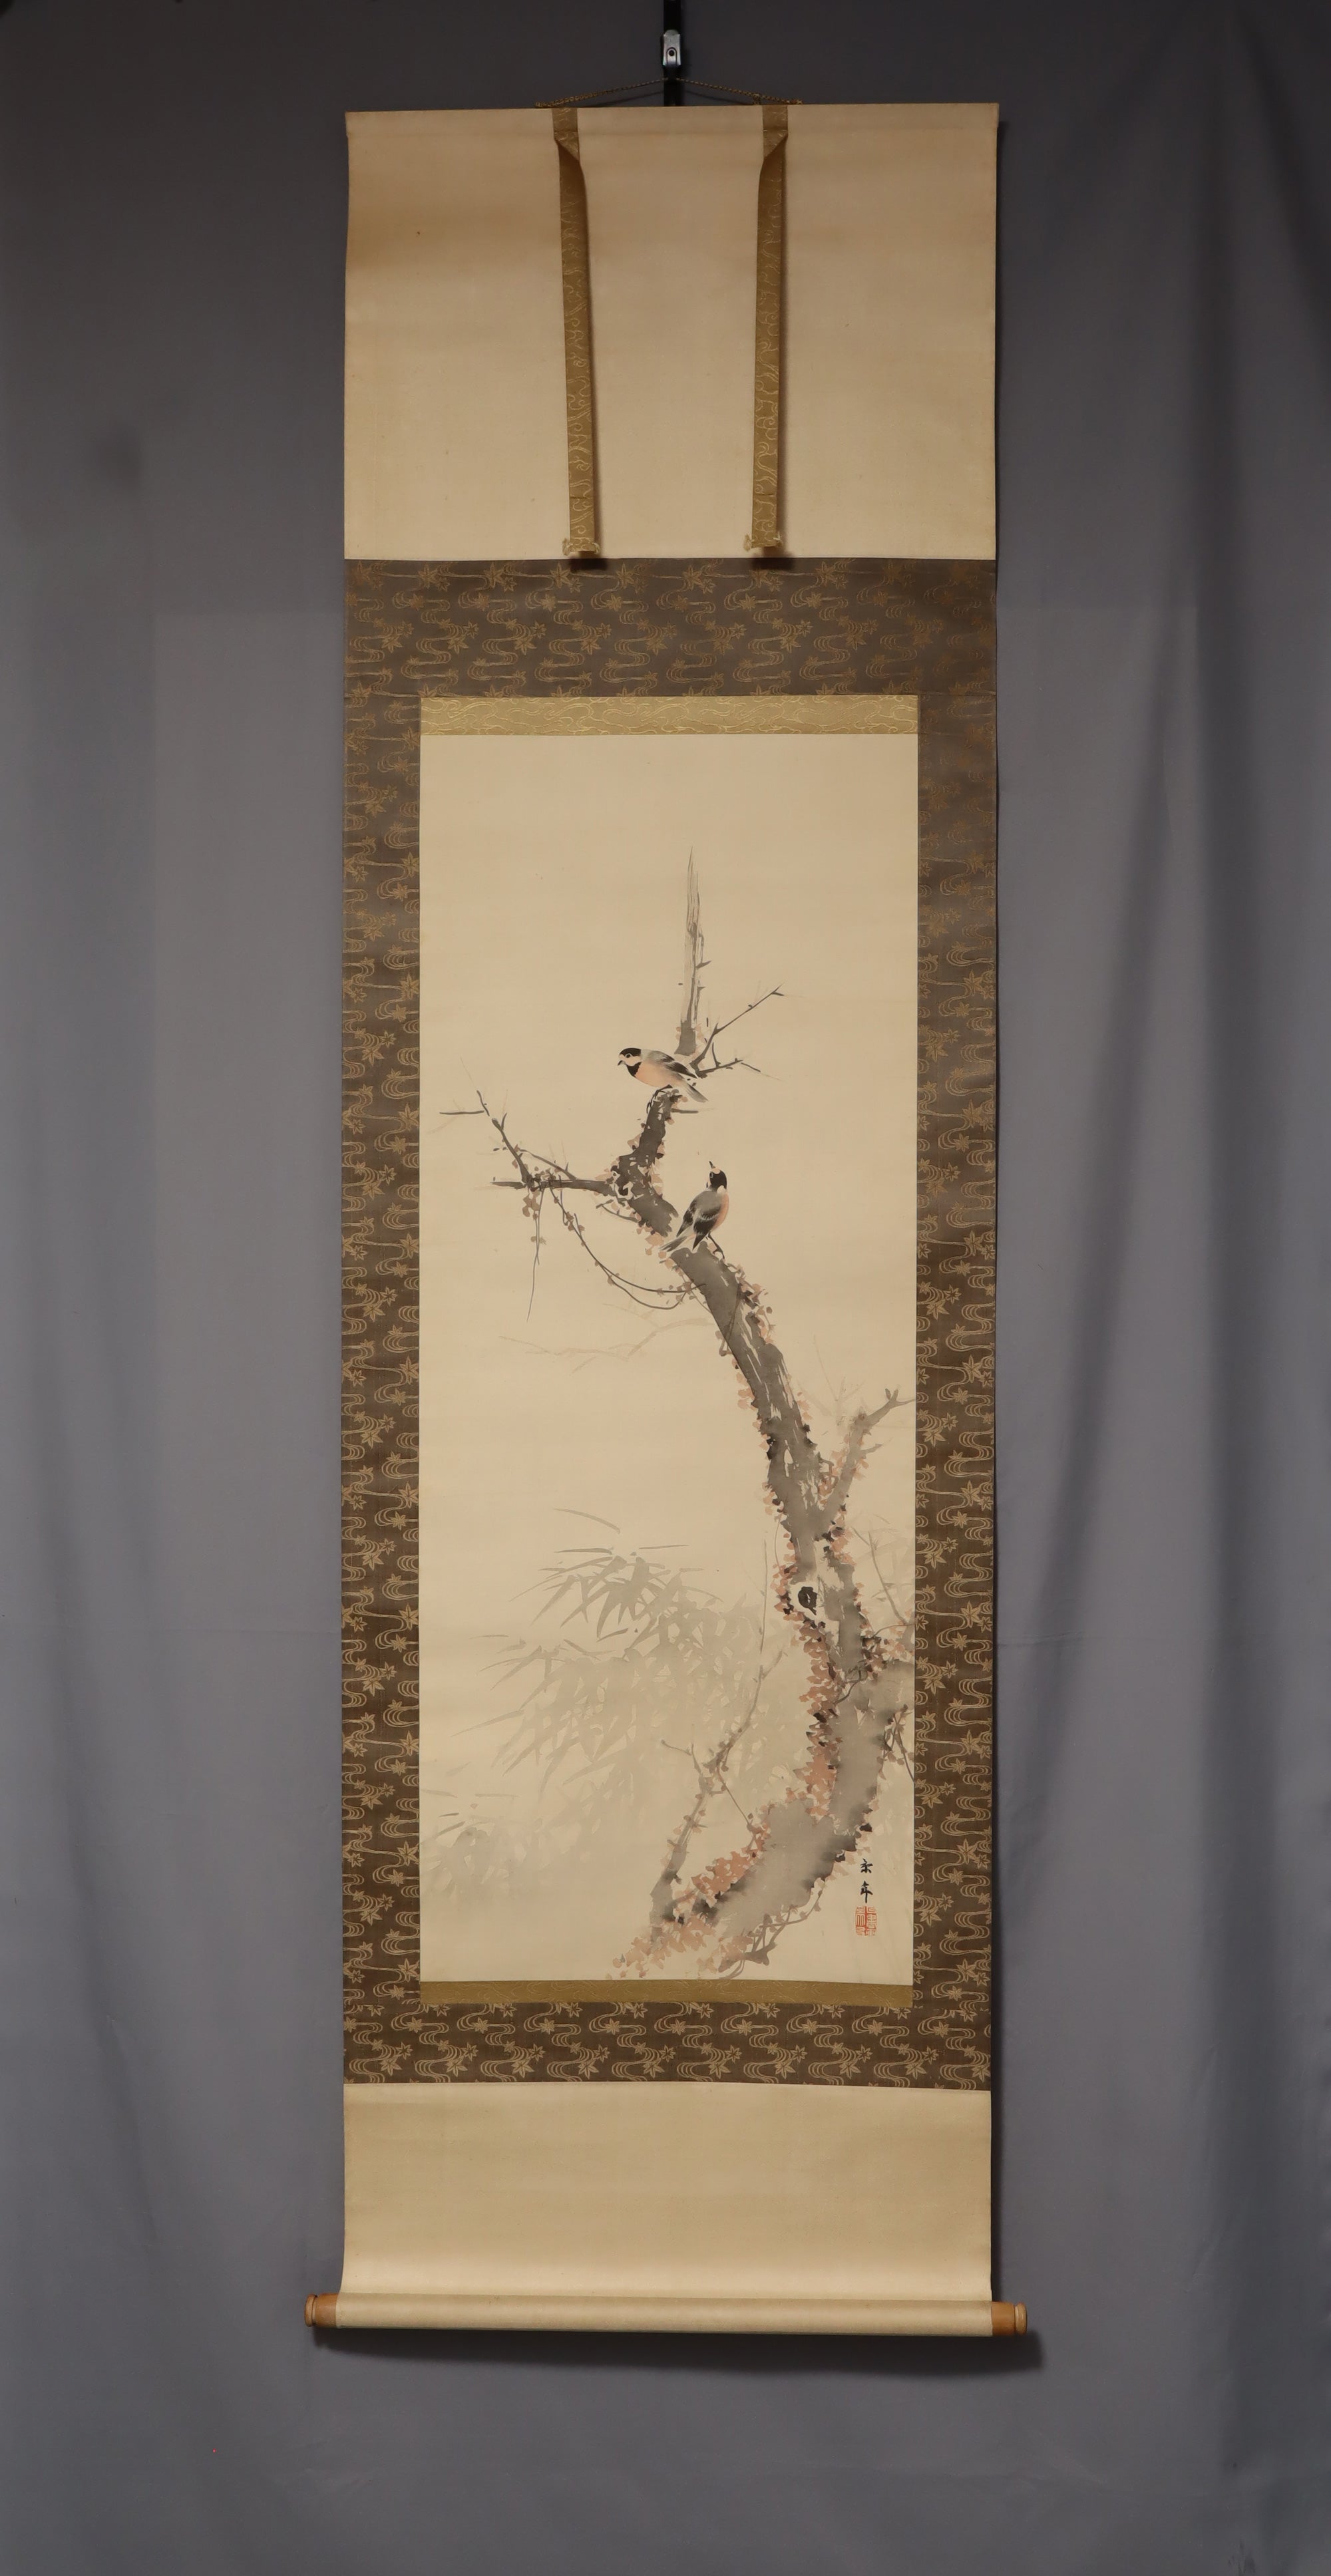 Imao Keinen（1845-1924）“旧树，红色常春藤和小鸟”明治 - 泰沙时代